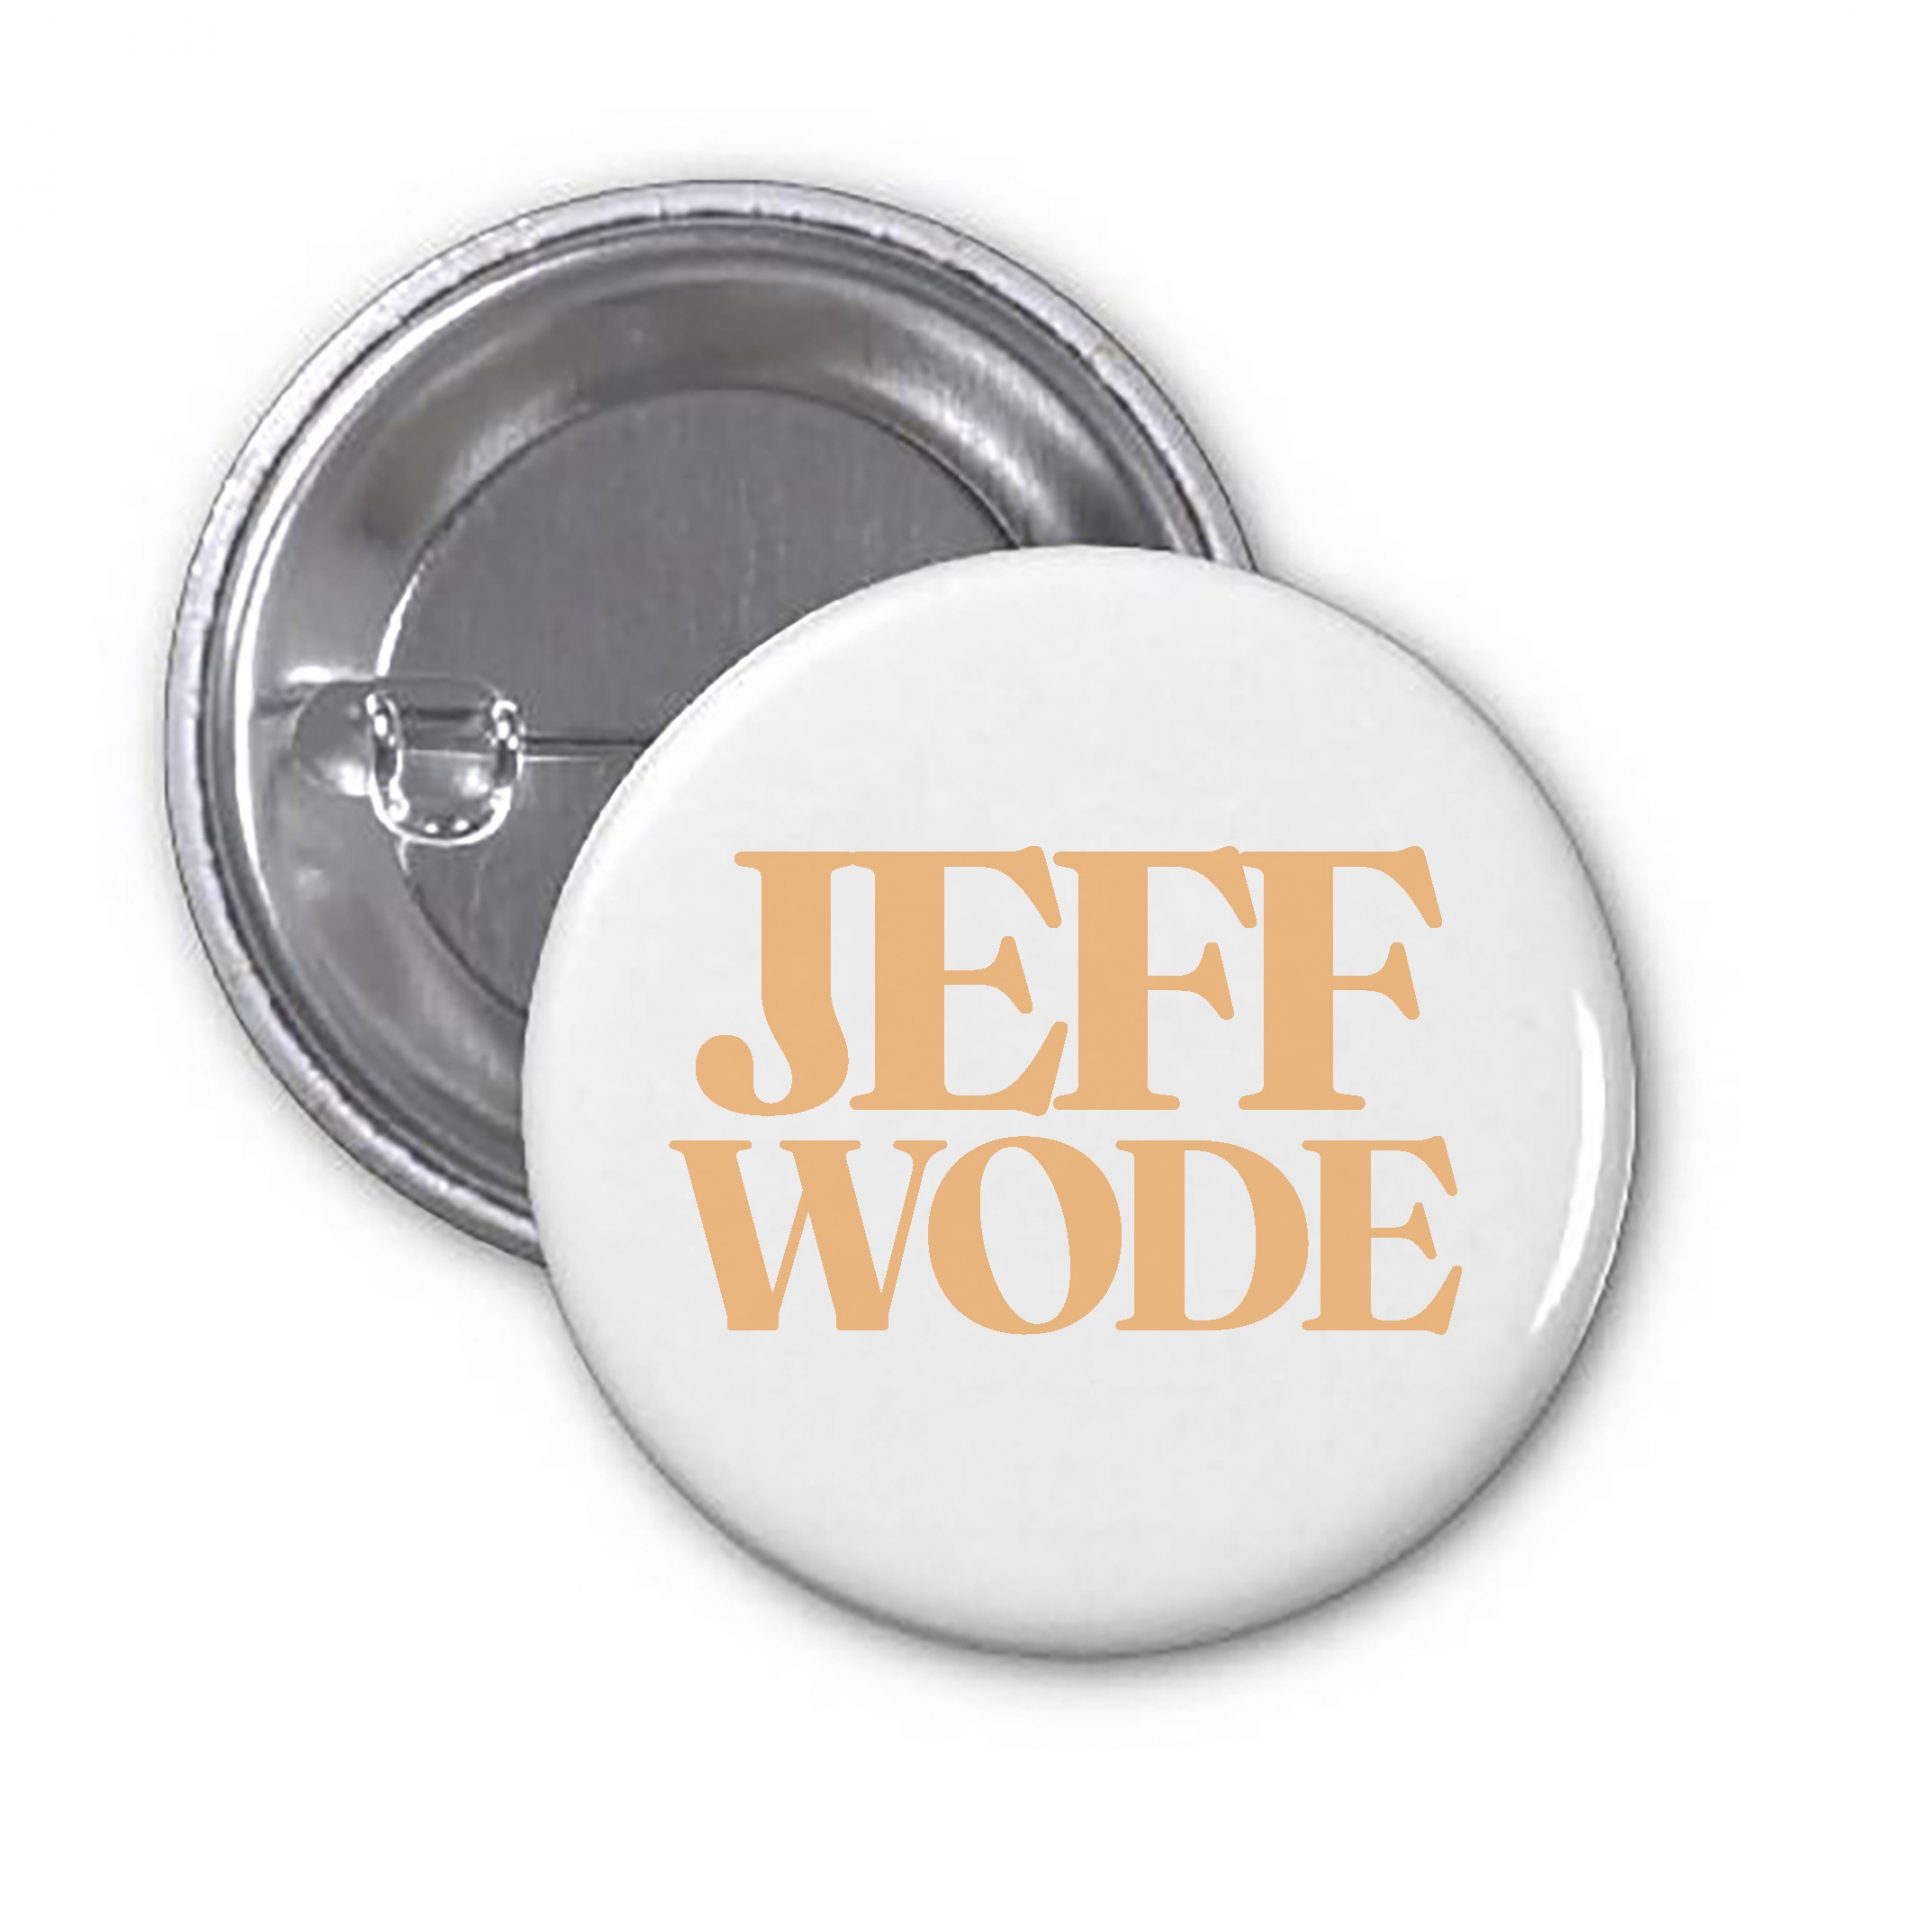 JEFF WODE